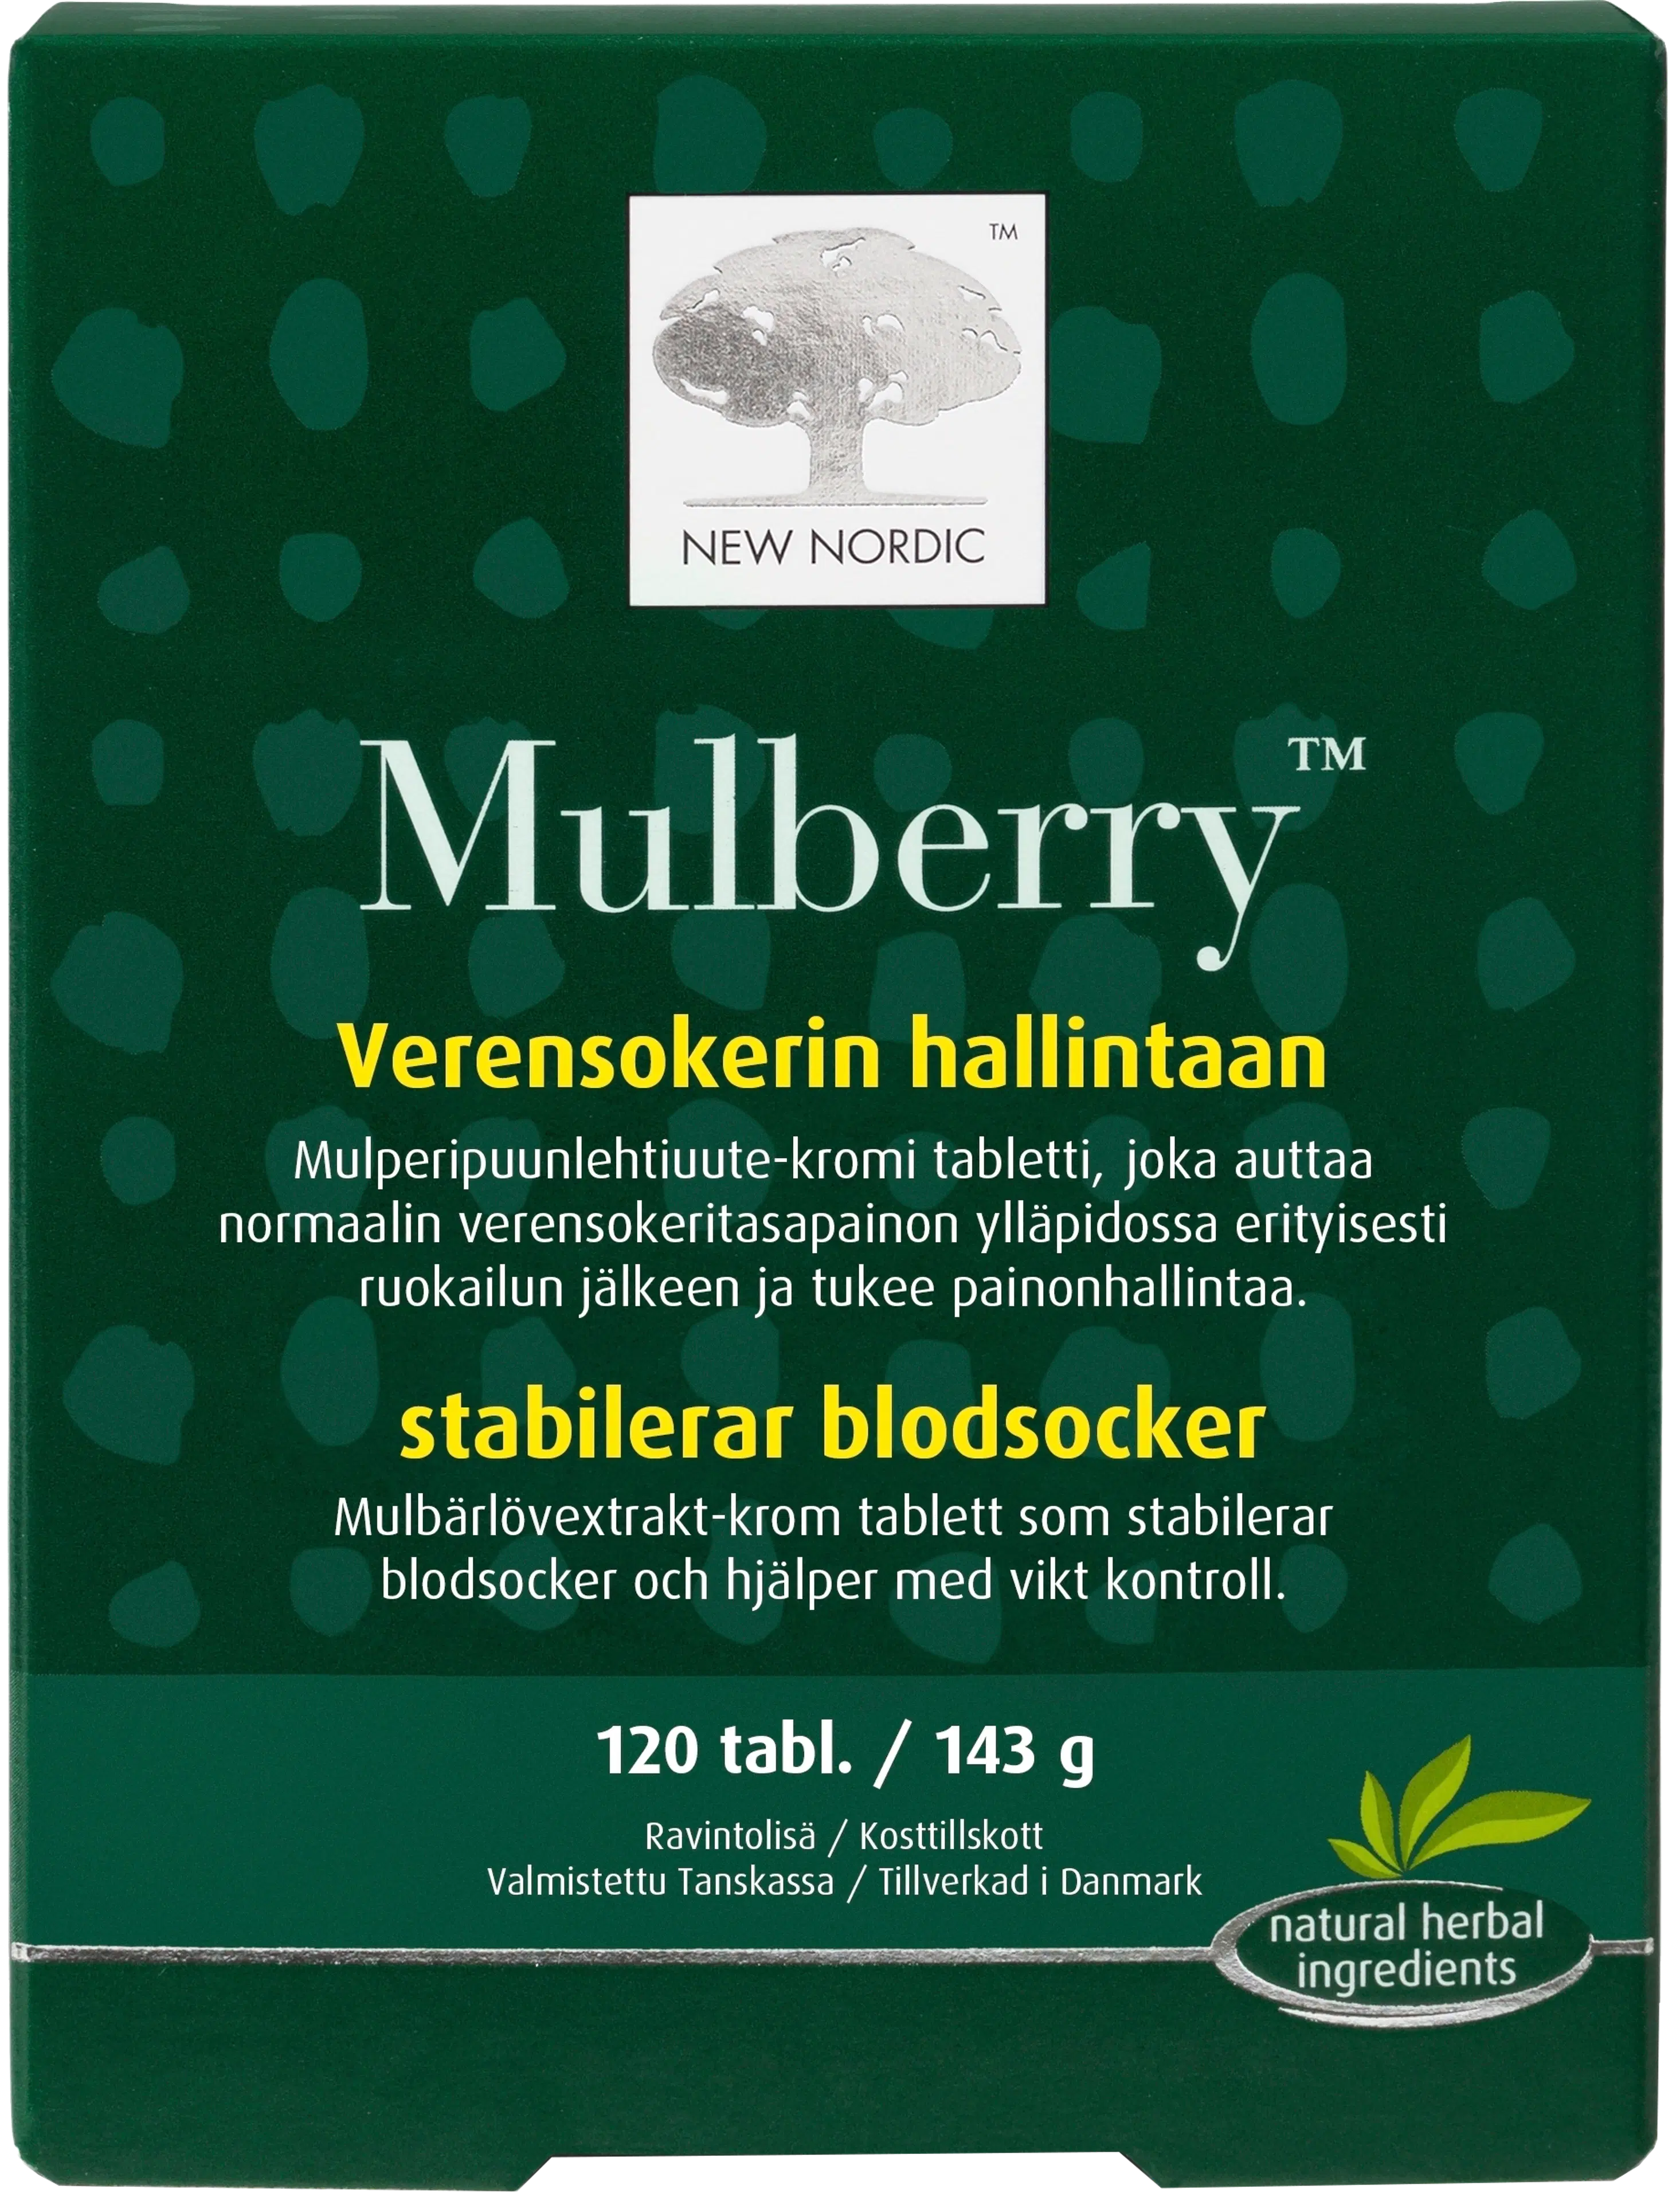 New Nordic Mulberry™ ravintolisä 120 tabl. / 143 g